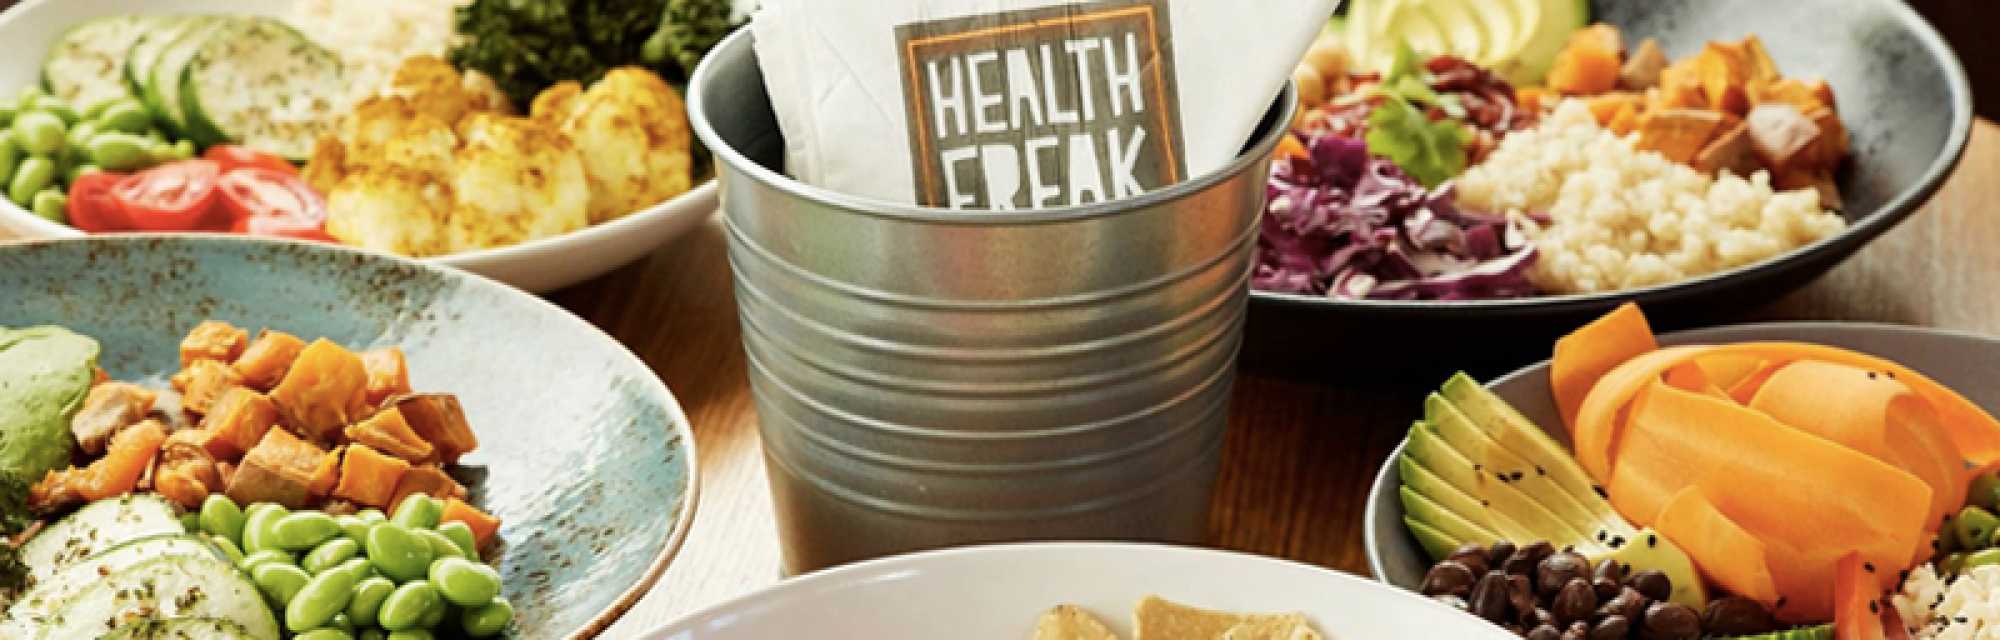 Health Freak Cafe Joondalup